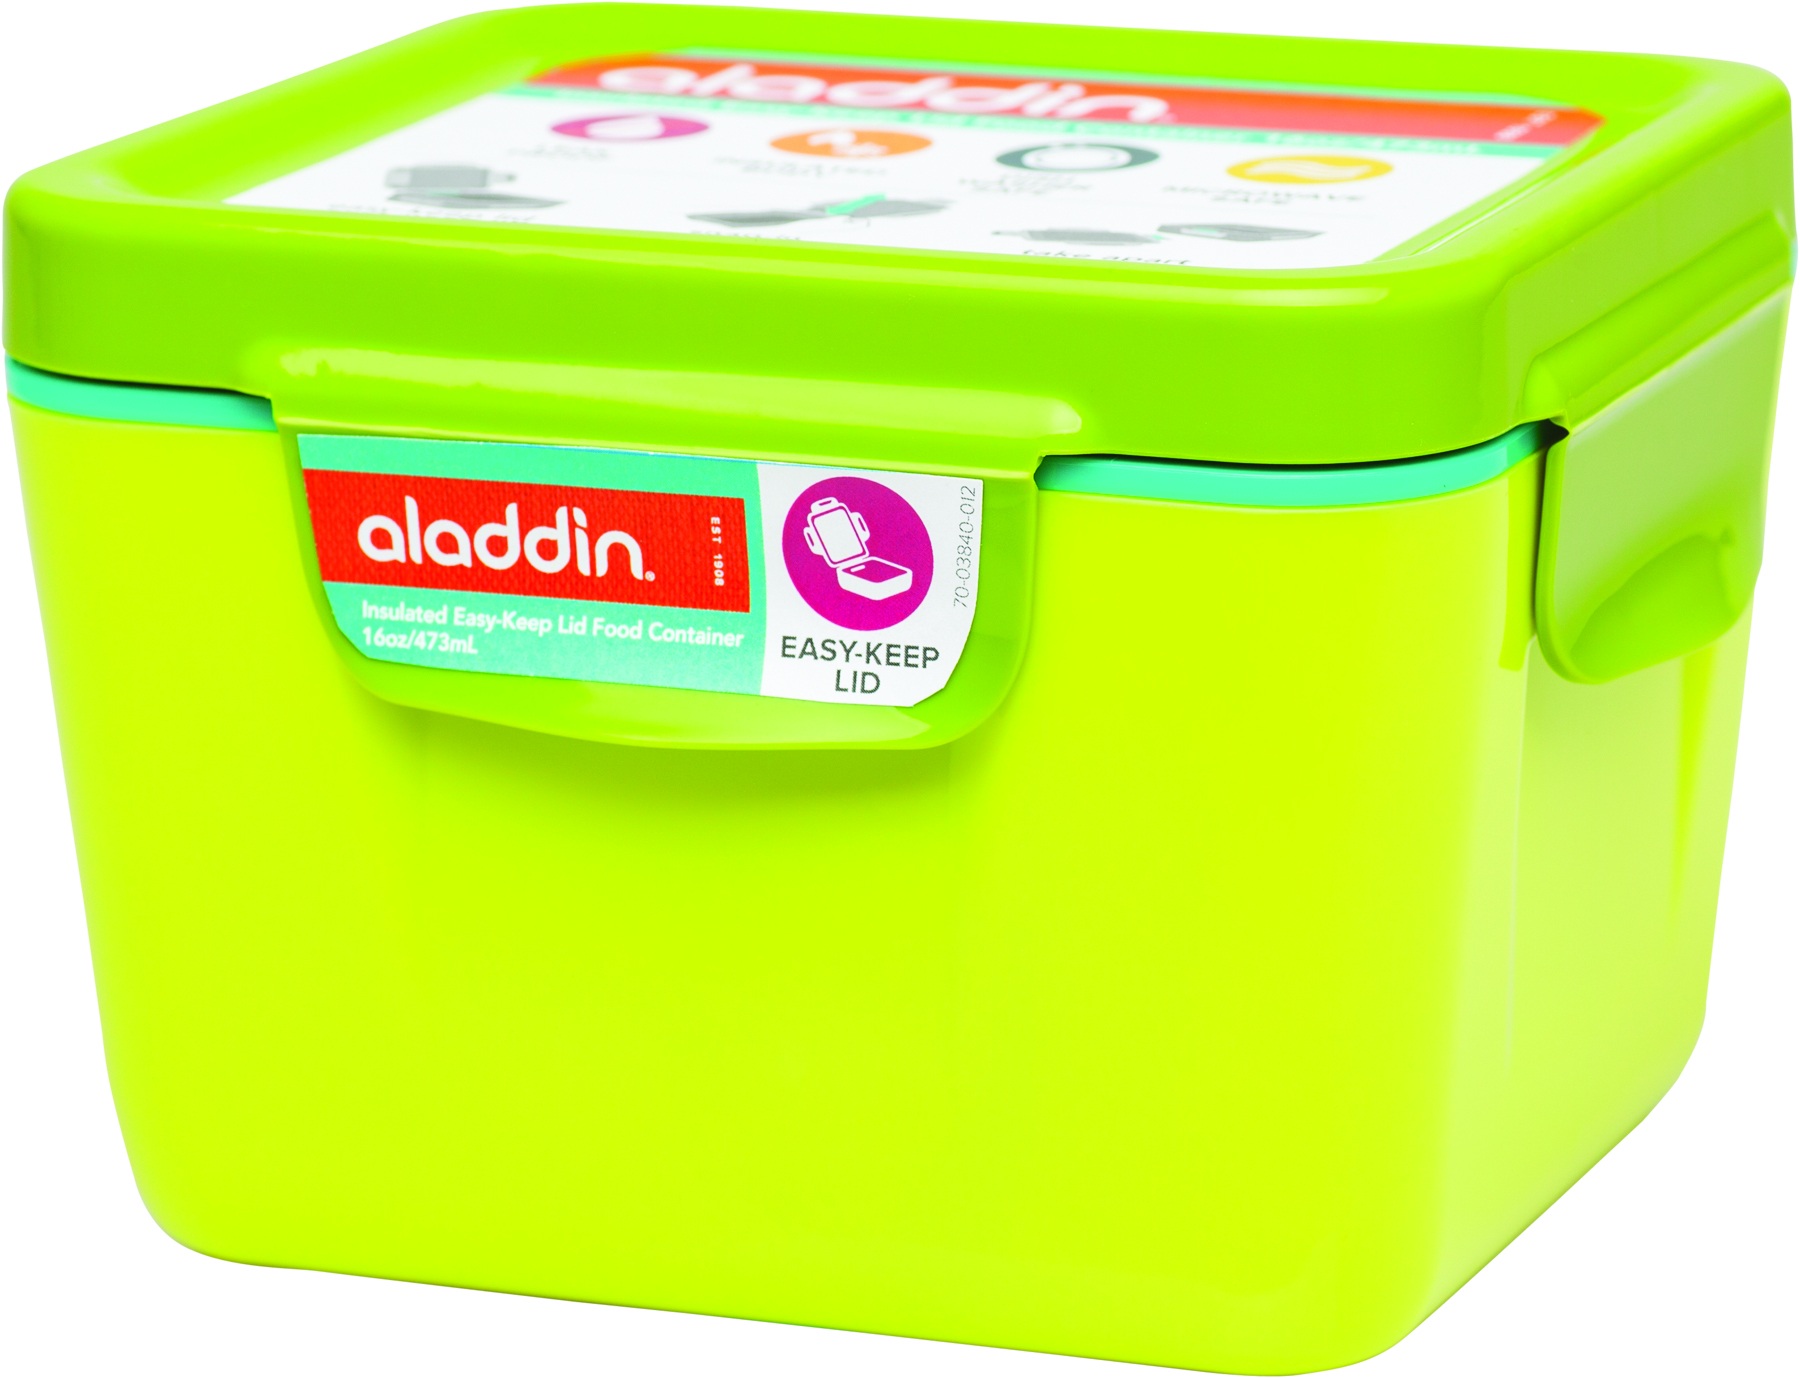 Keep 00. Aladdin контейнеры термосы. Easy keep Lid. Green Box еда.